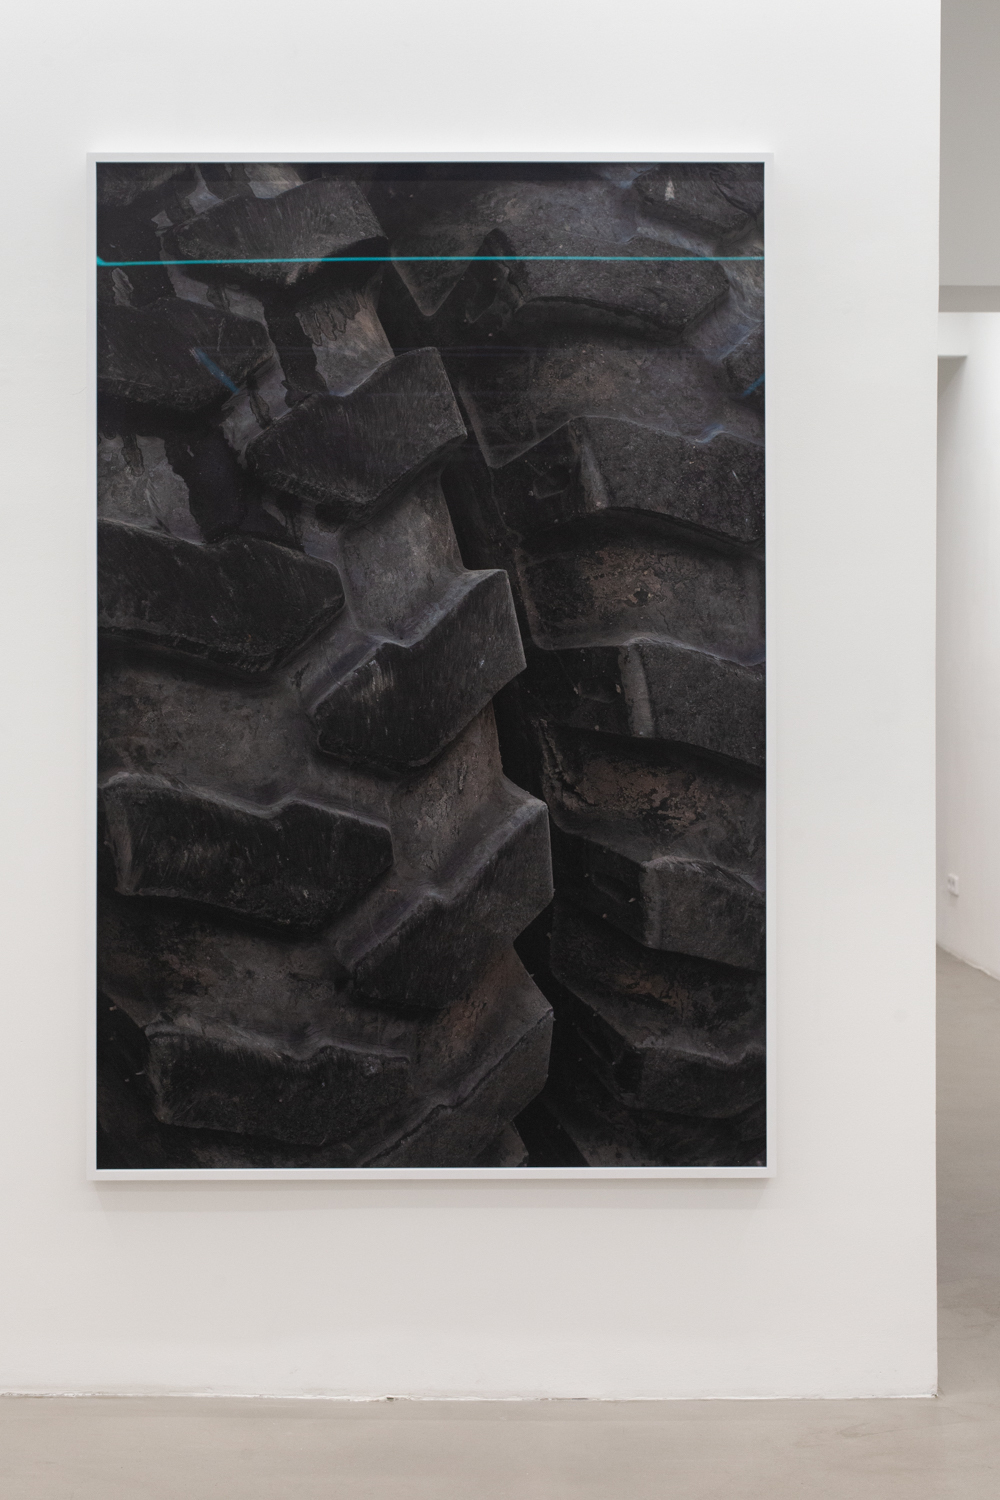 Paul Hutchinson, wrath, 2020, Framed inkjet print, 195 x 130 cm, Edition of 1 + 1 AP